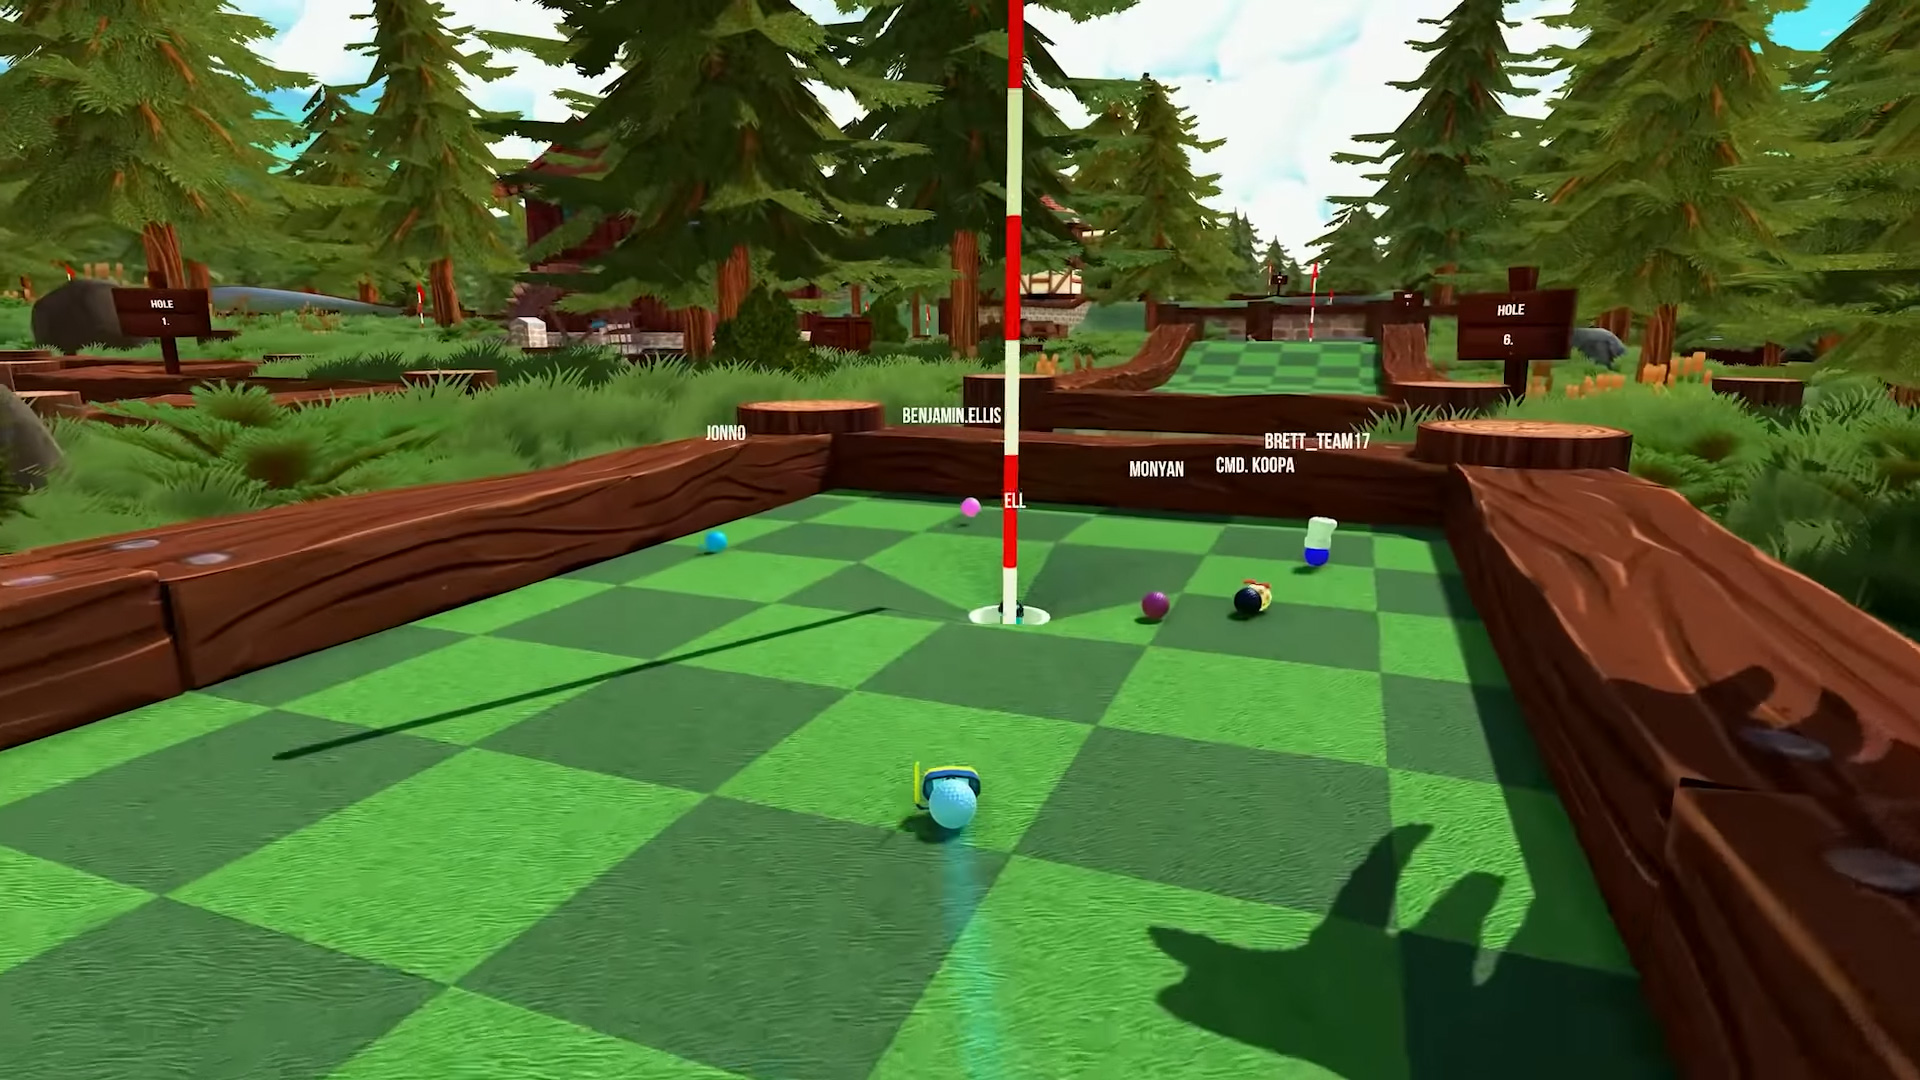 Is Golf With Friends Cross Platform Xbox Pc?